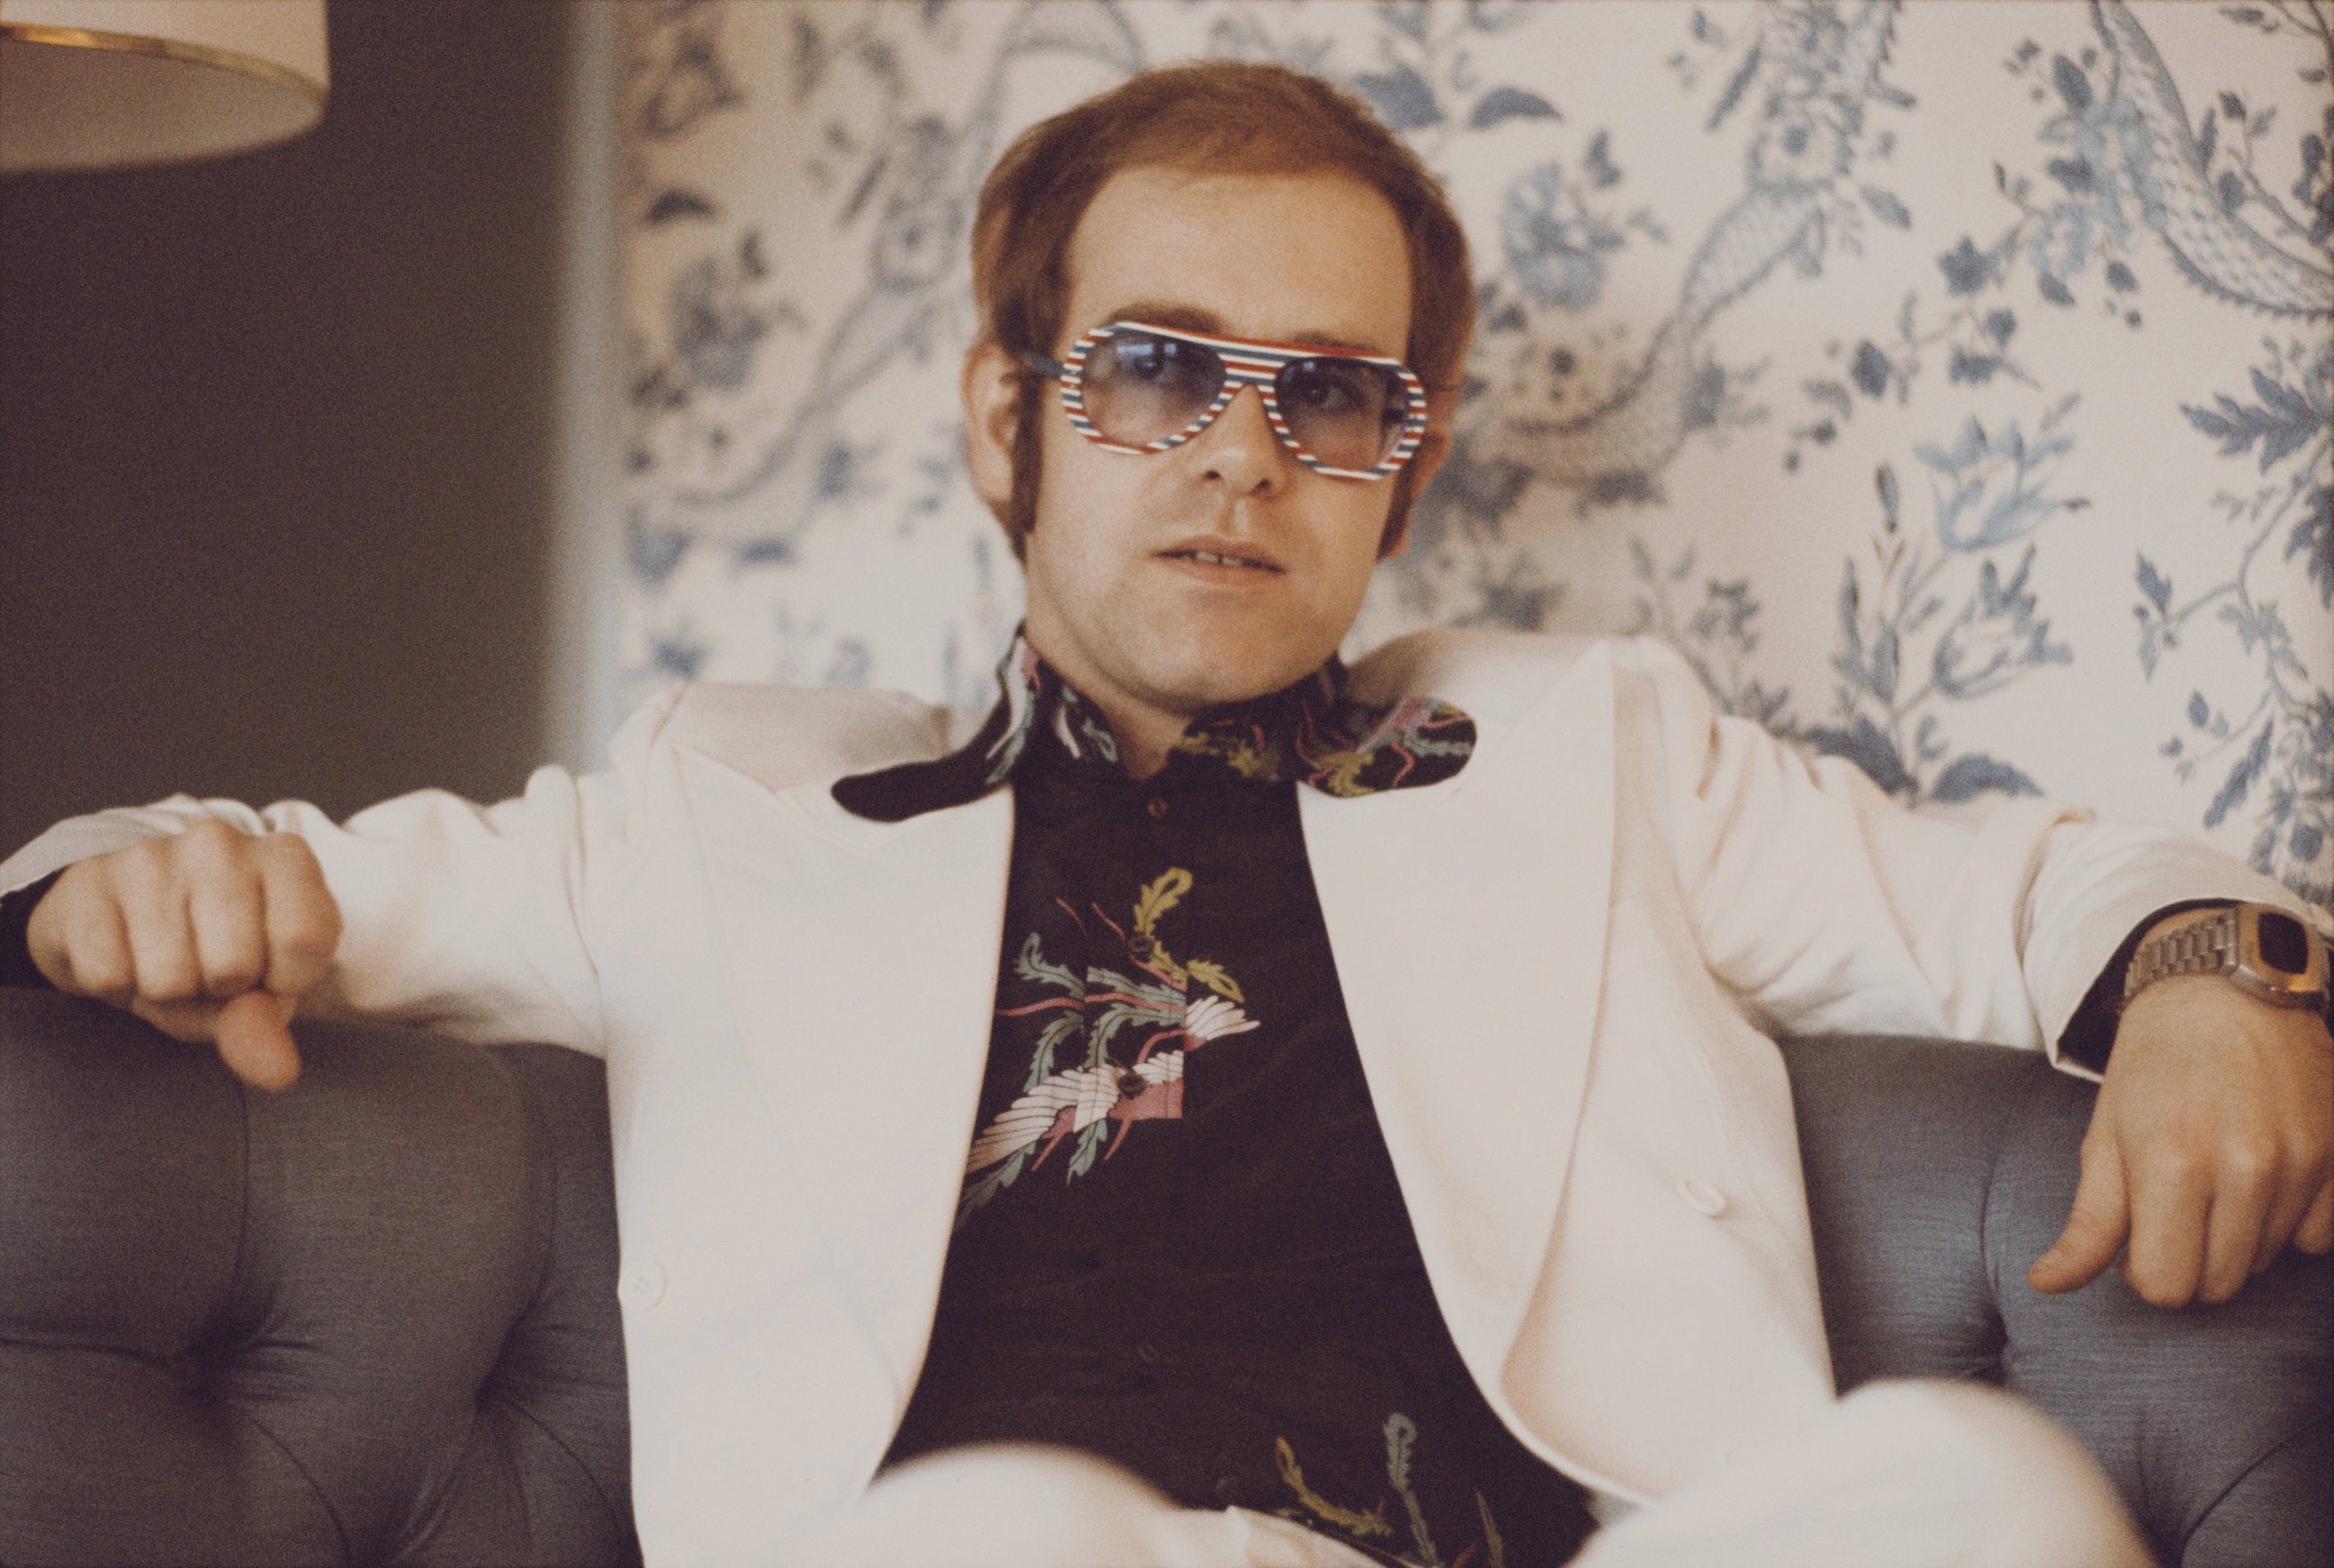 Elton John during his "Bennie and the Jets" era